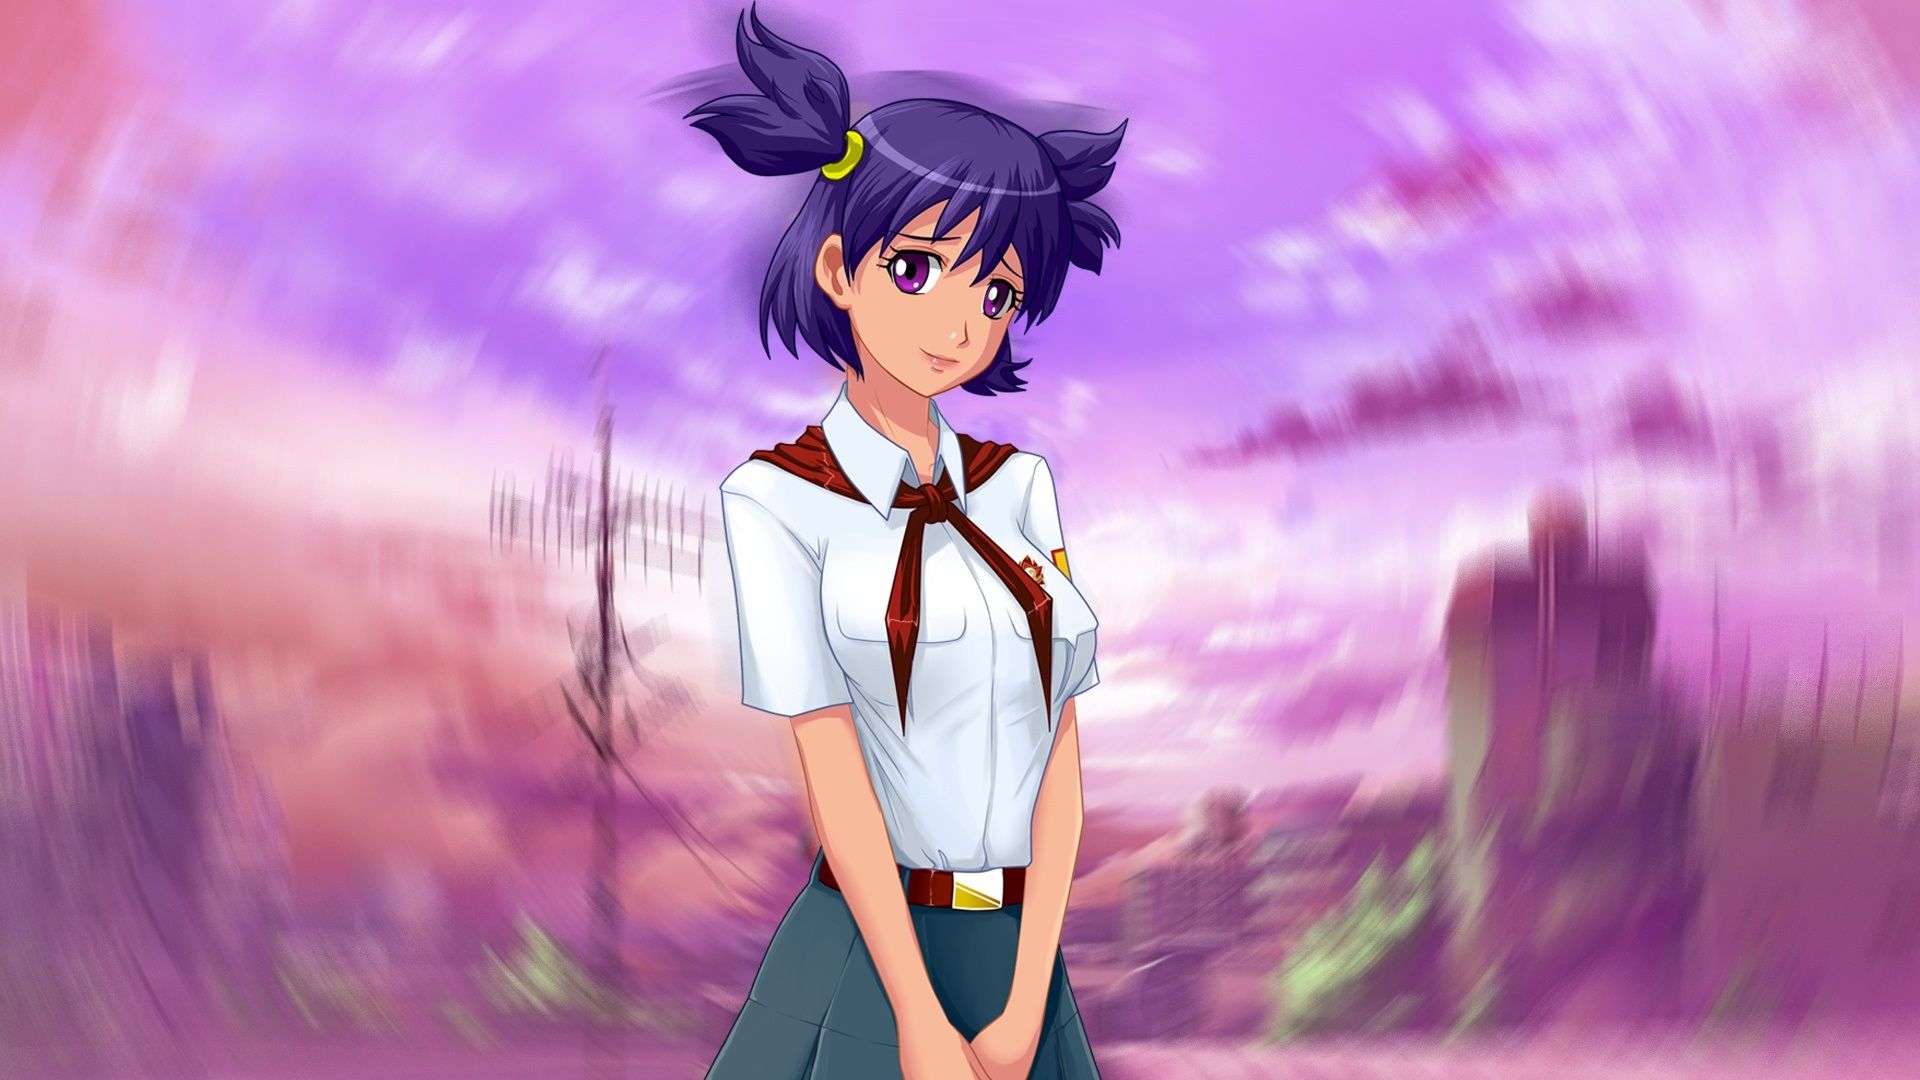 Wallpaper Blue hair school girl, purple eyes, anime 1920x1080 Full HD 2K Picture, Image